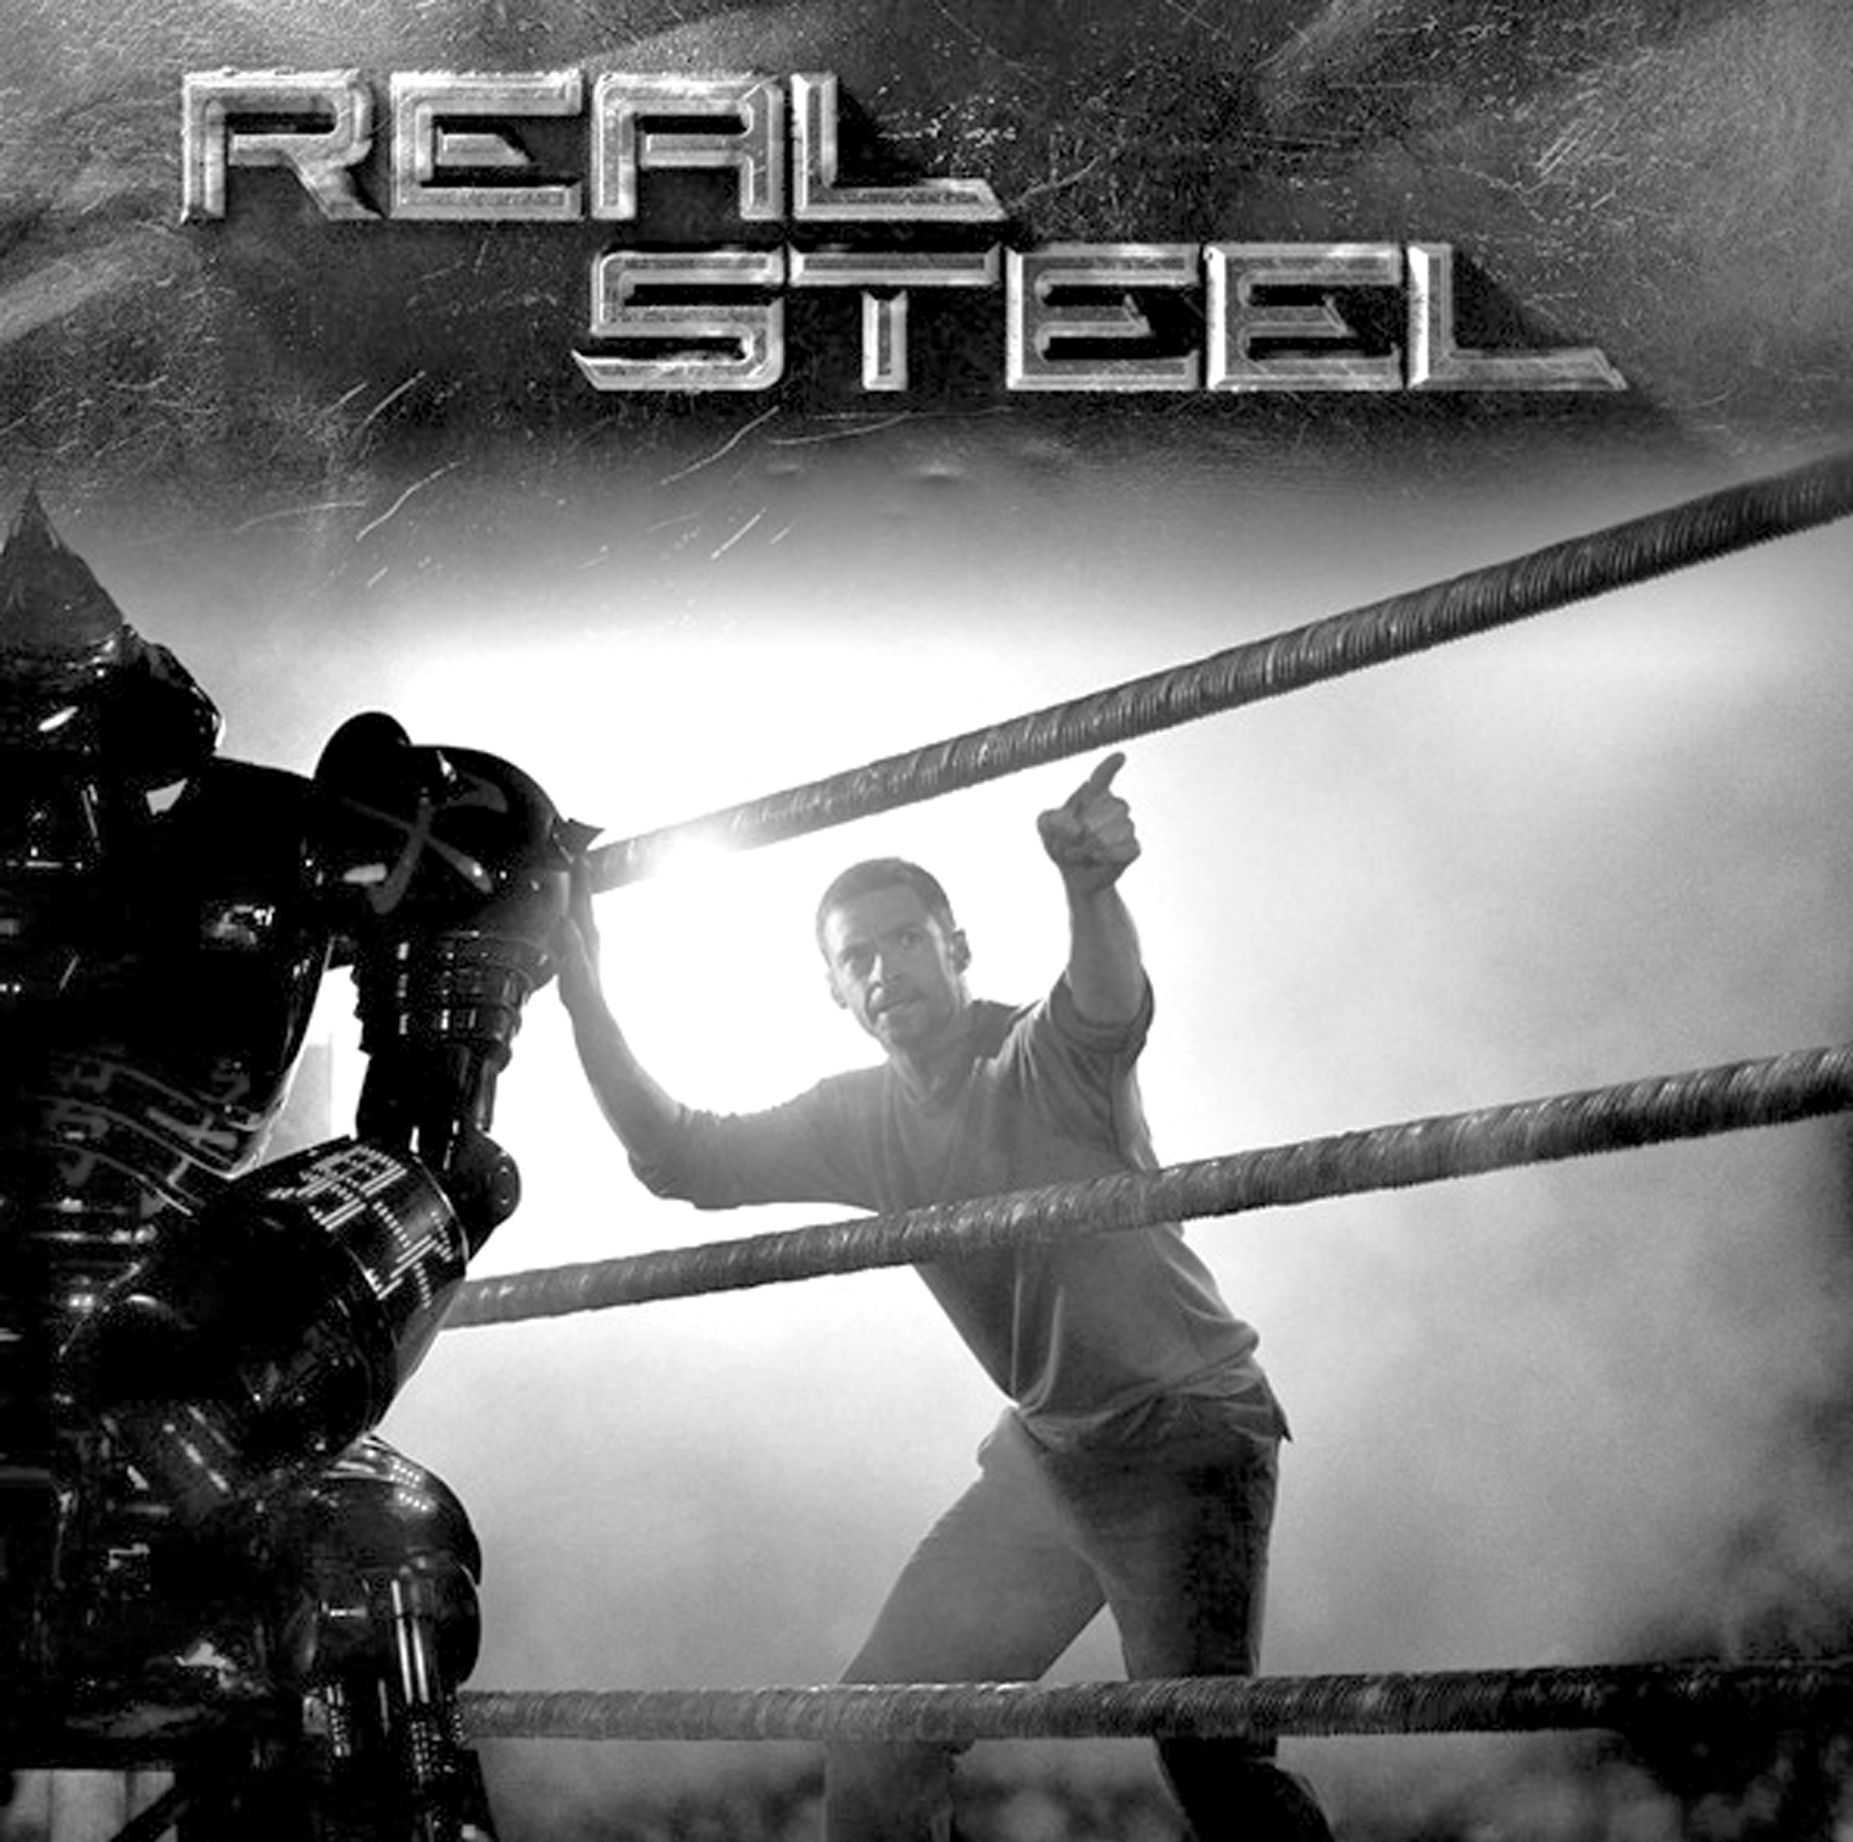 Real steel 2: hugh jackman sequel still has a fighting chance